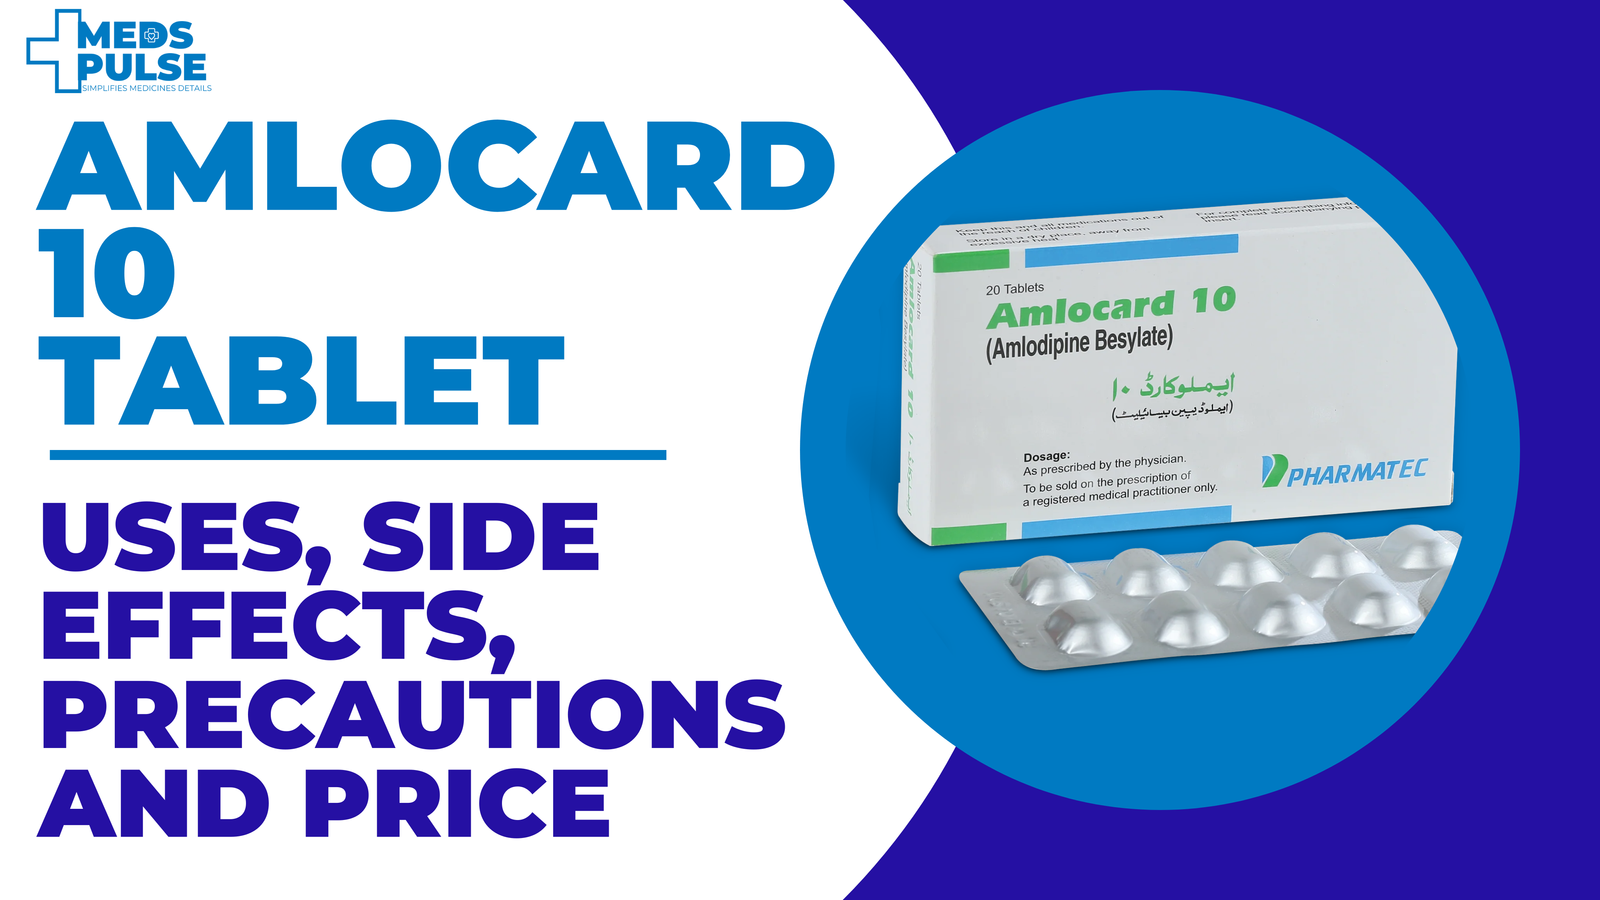 Amlocard 10 Tablet